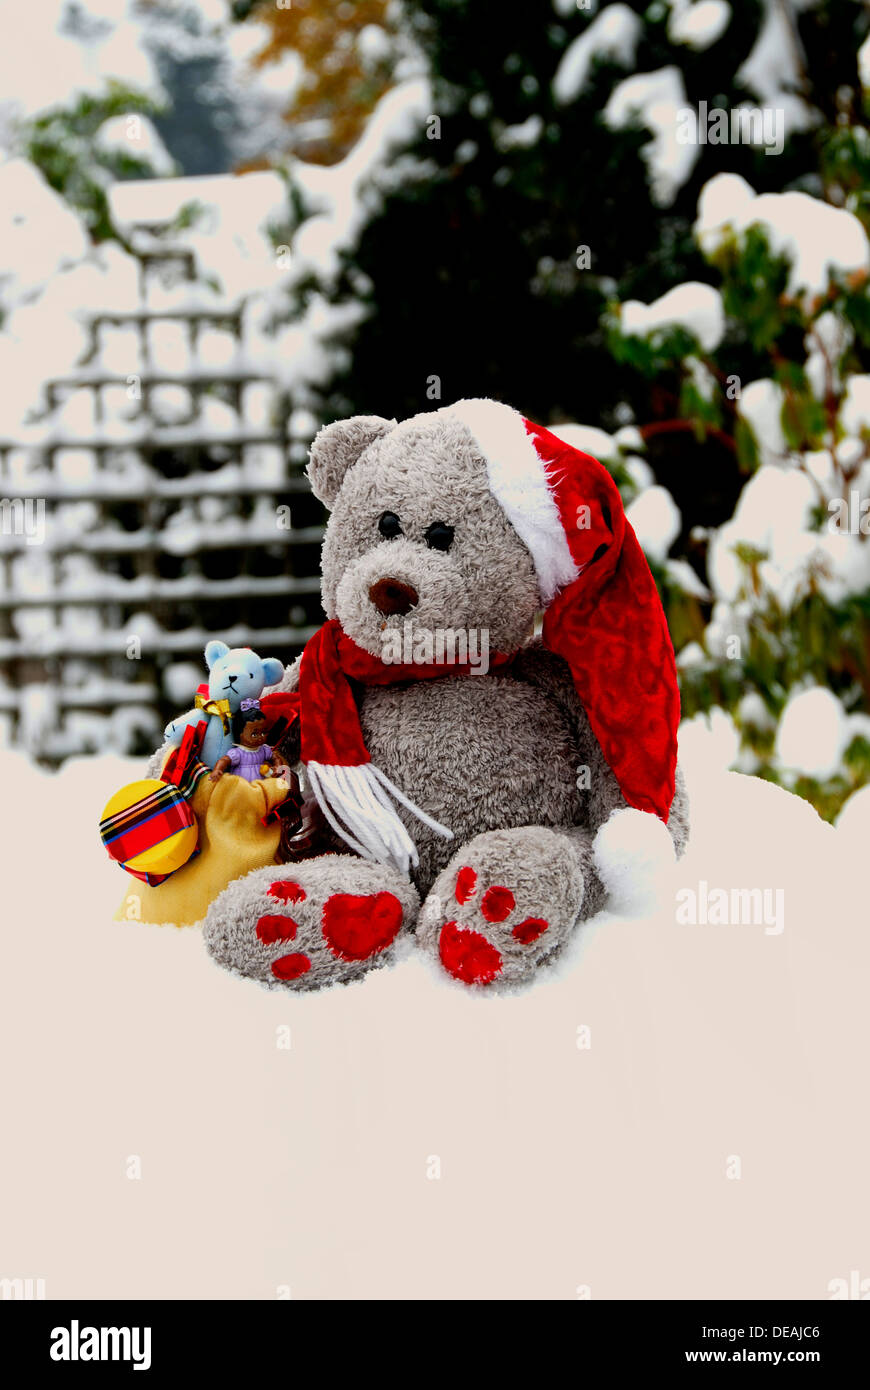 A Teddy Bear Santa Claus in the snow. Stock Photo